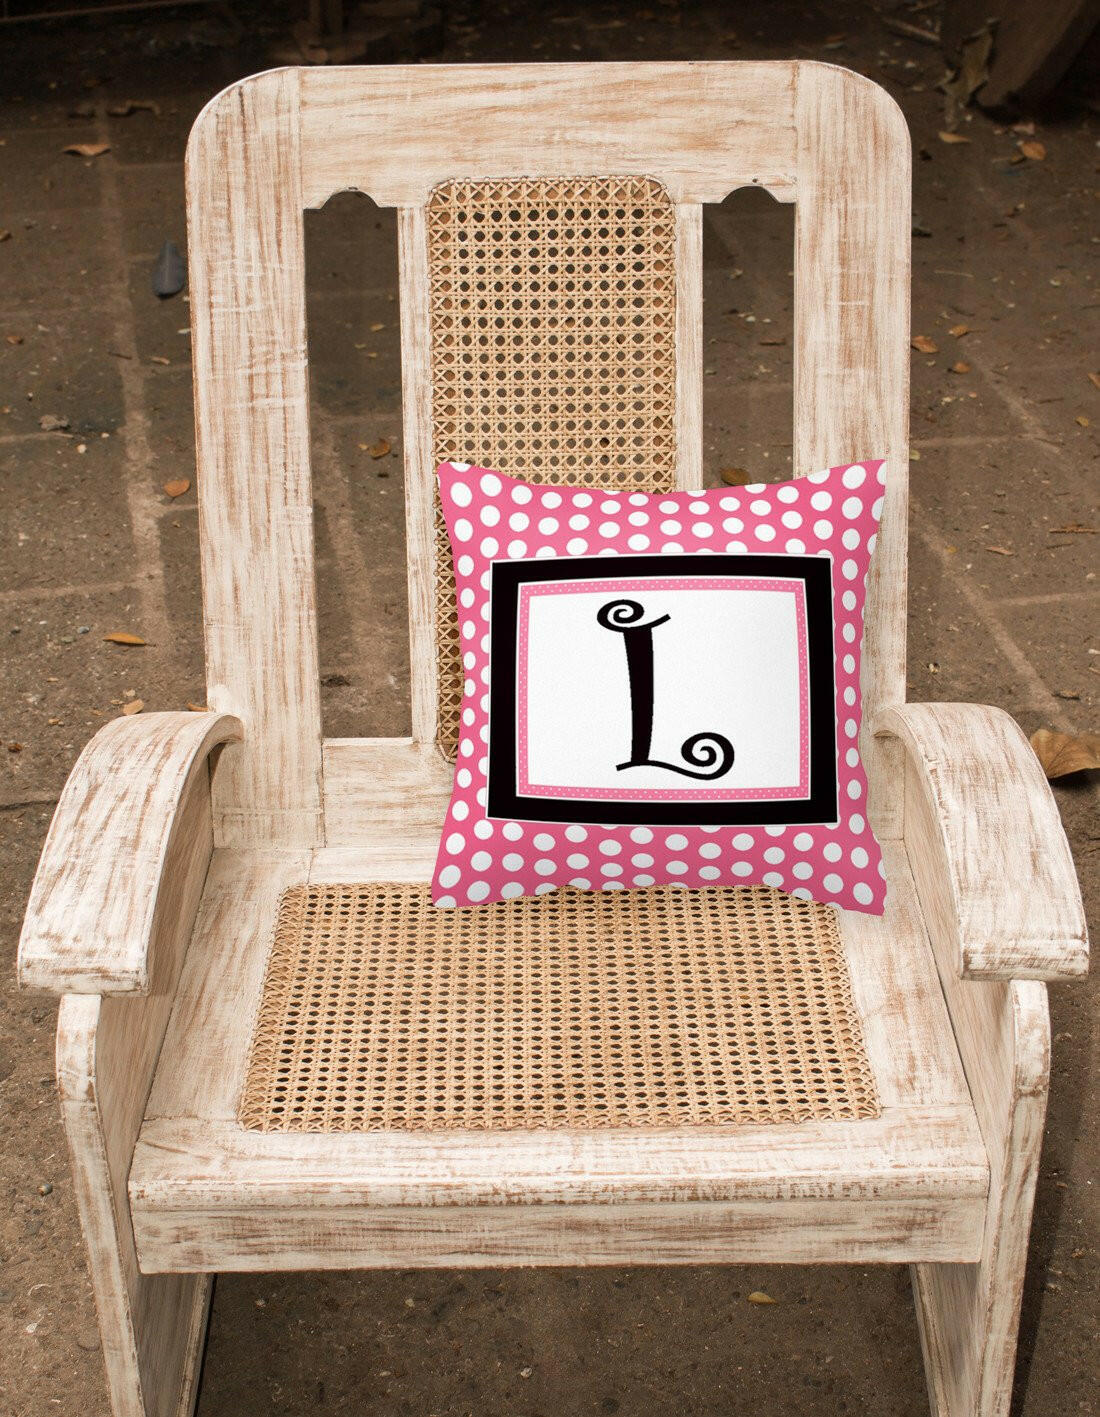 Letter L Initial Monogram Pink Black Polka Dots Decorative Canvas Fabric Pillow - the-store.com